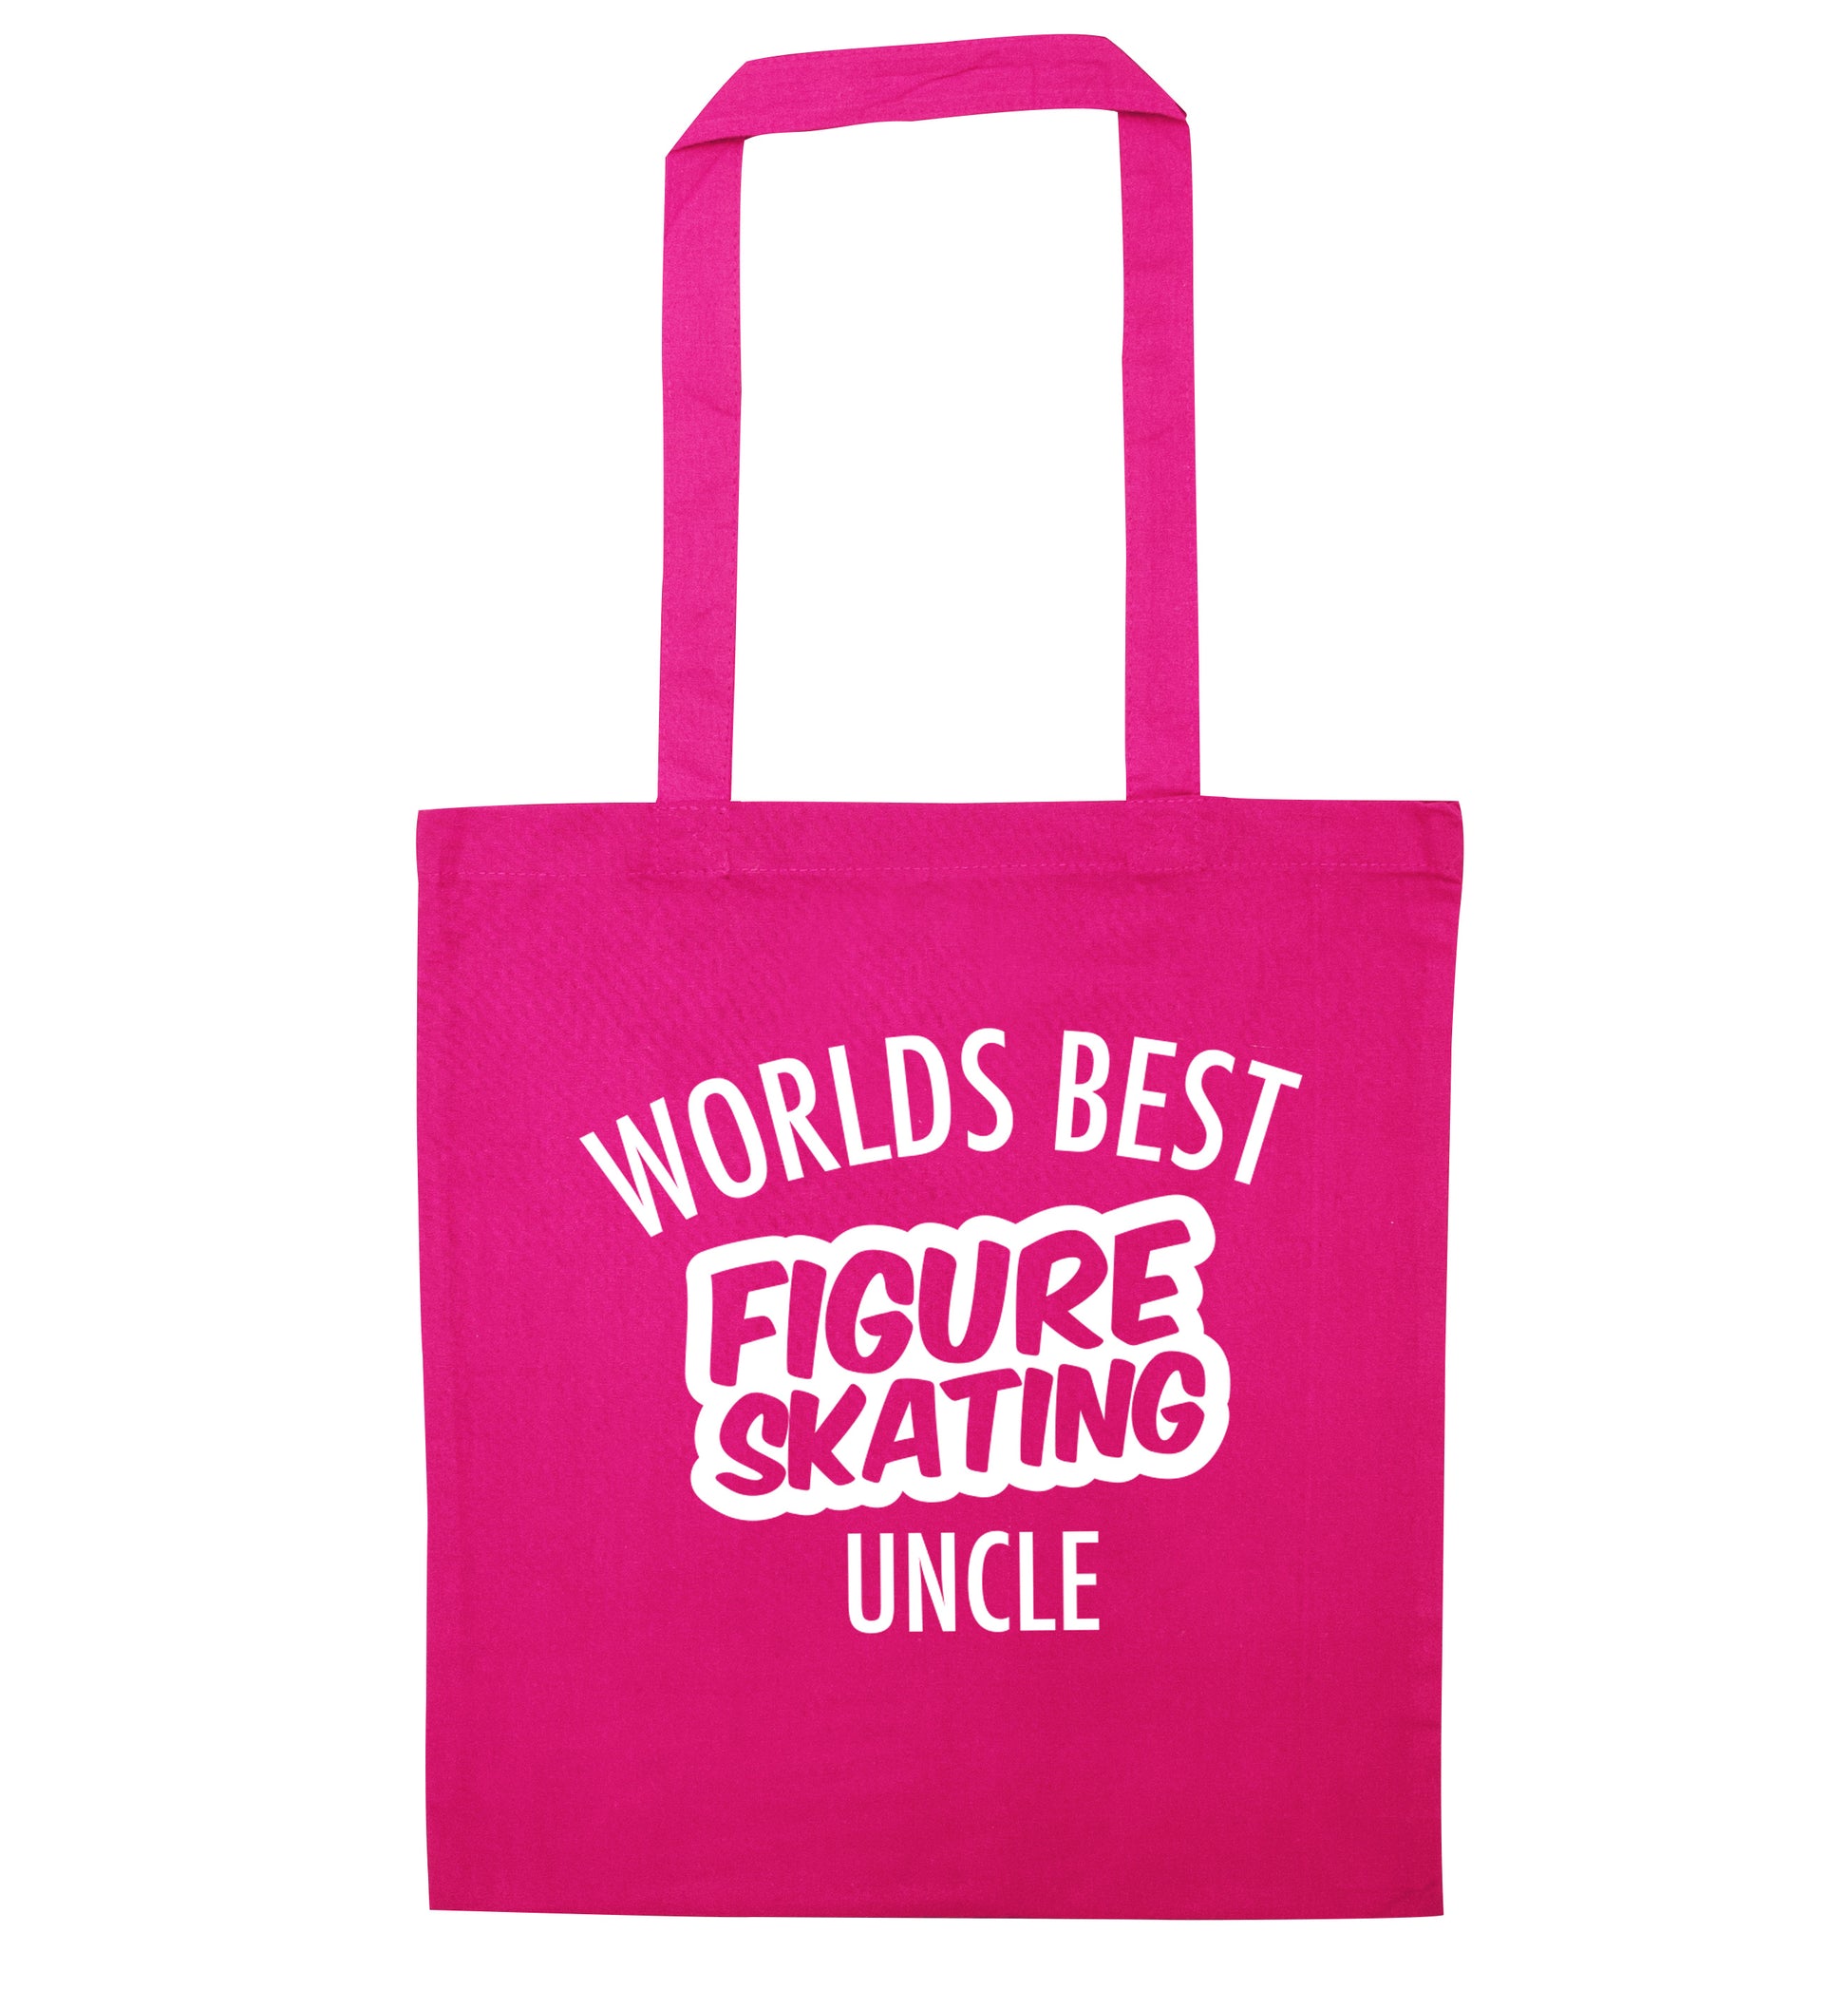 Worlds best figure skating uncle pink tote bag